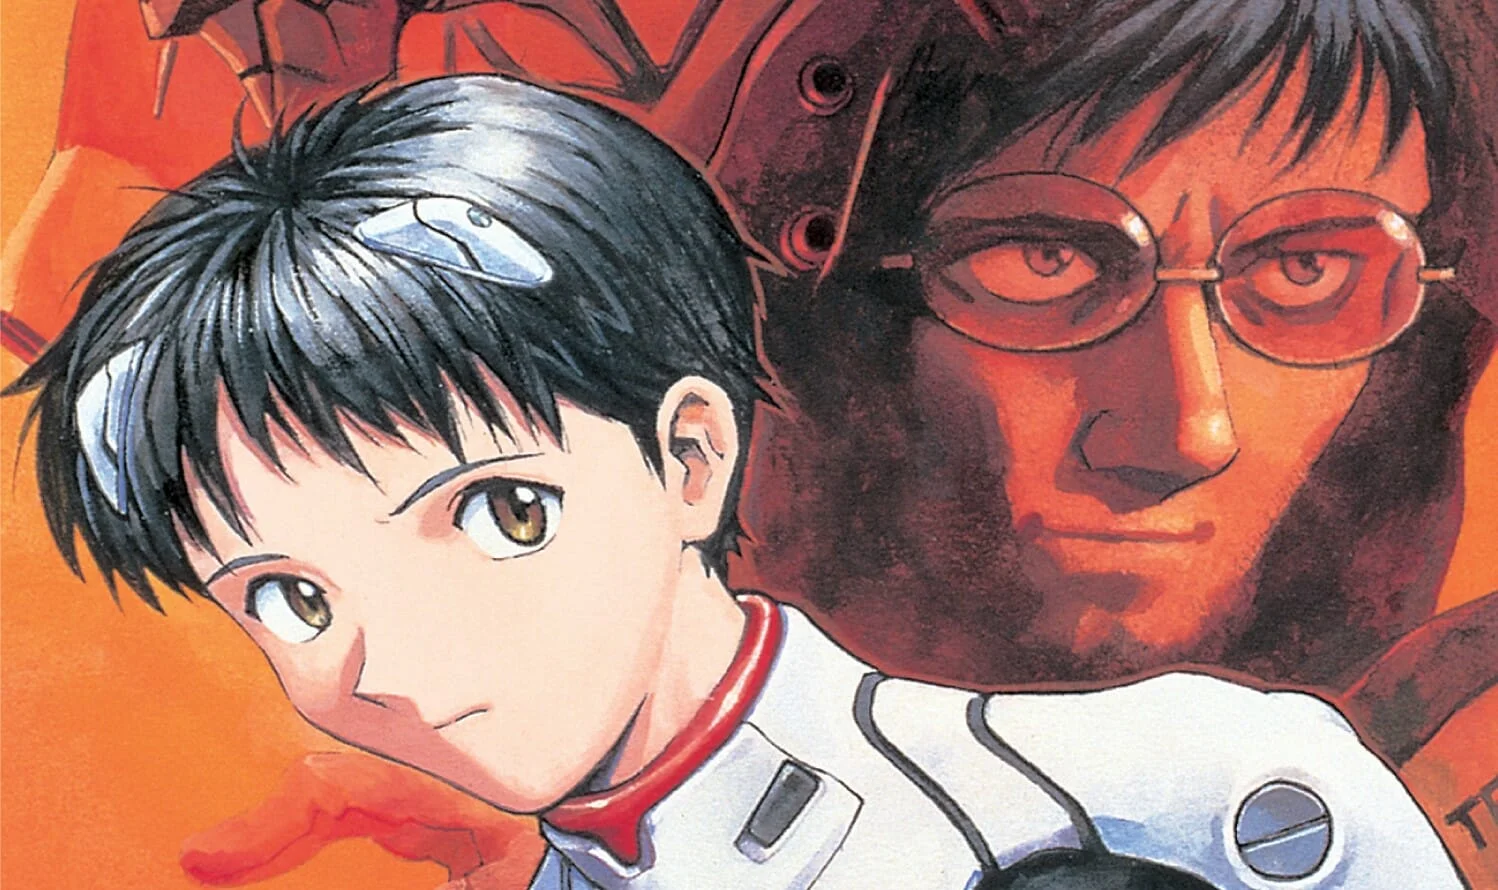 The Neon Genesis Evangelion manga is an oedipal take on mecha